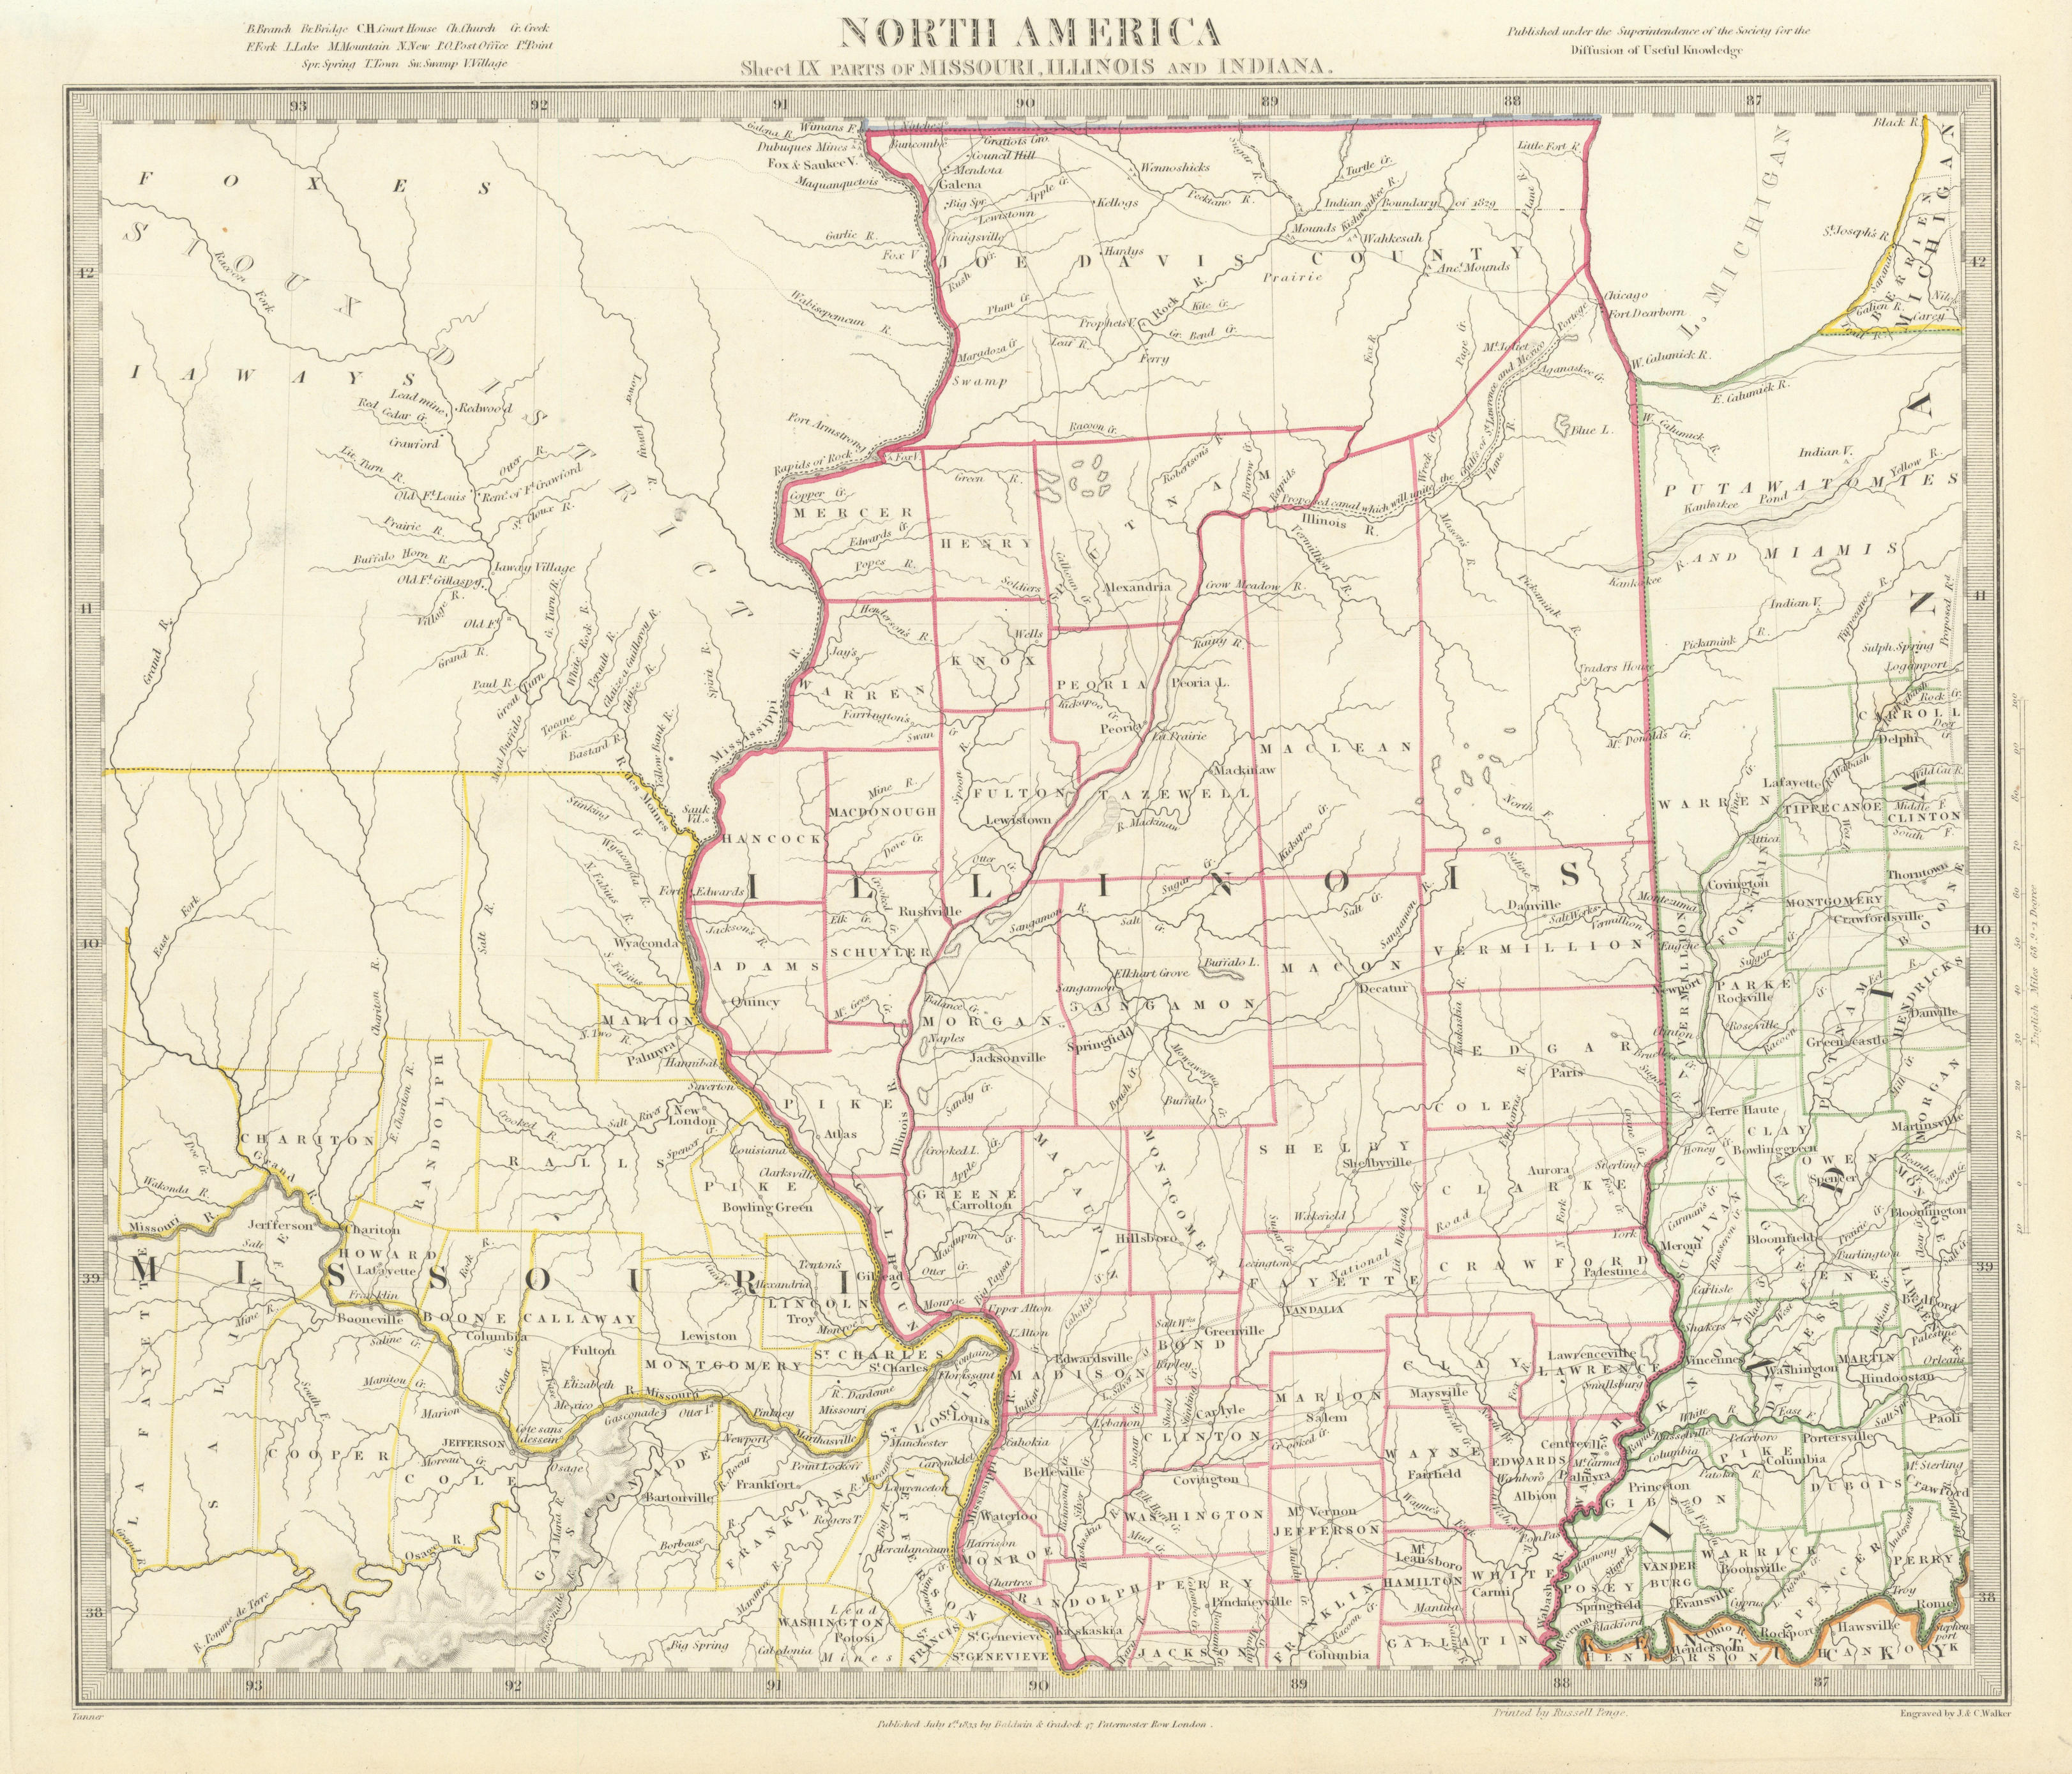 Associate Product USA. Missouri Illinois Indiana. Indian tribes villages borders. SDUK 1844 map